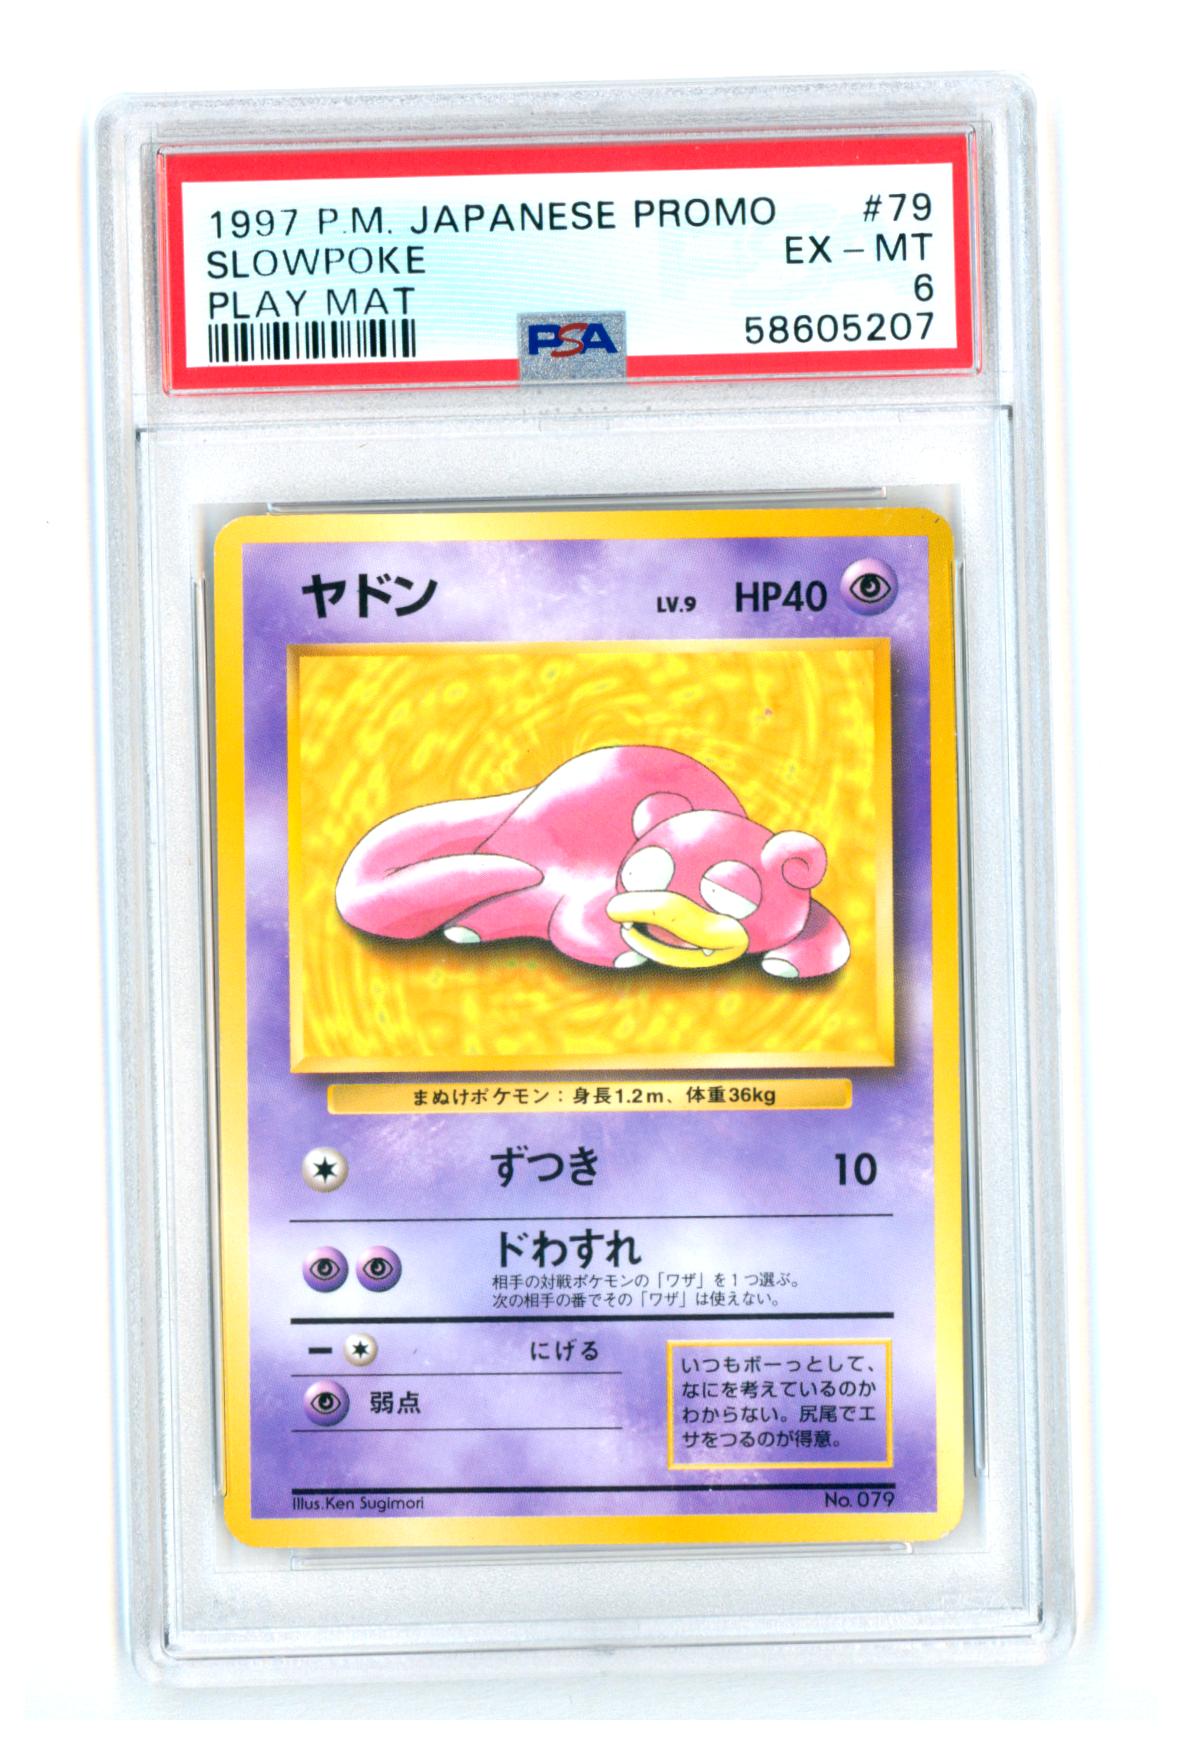 Slowpoke - Japanese Play Mat Promo - PSA 6 EX-MT​ - Pokémon